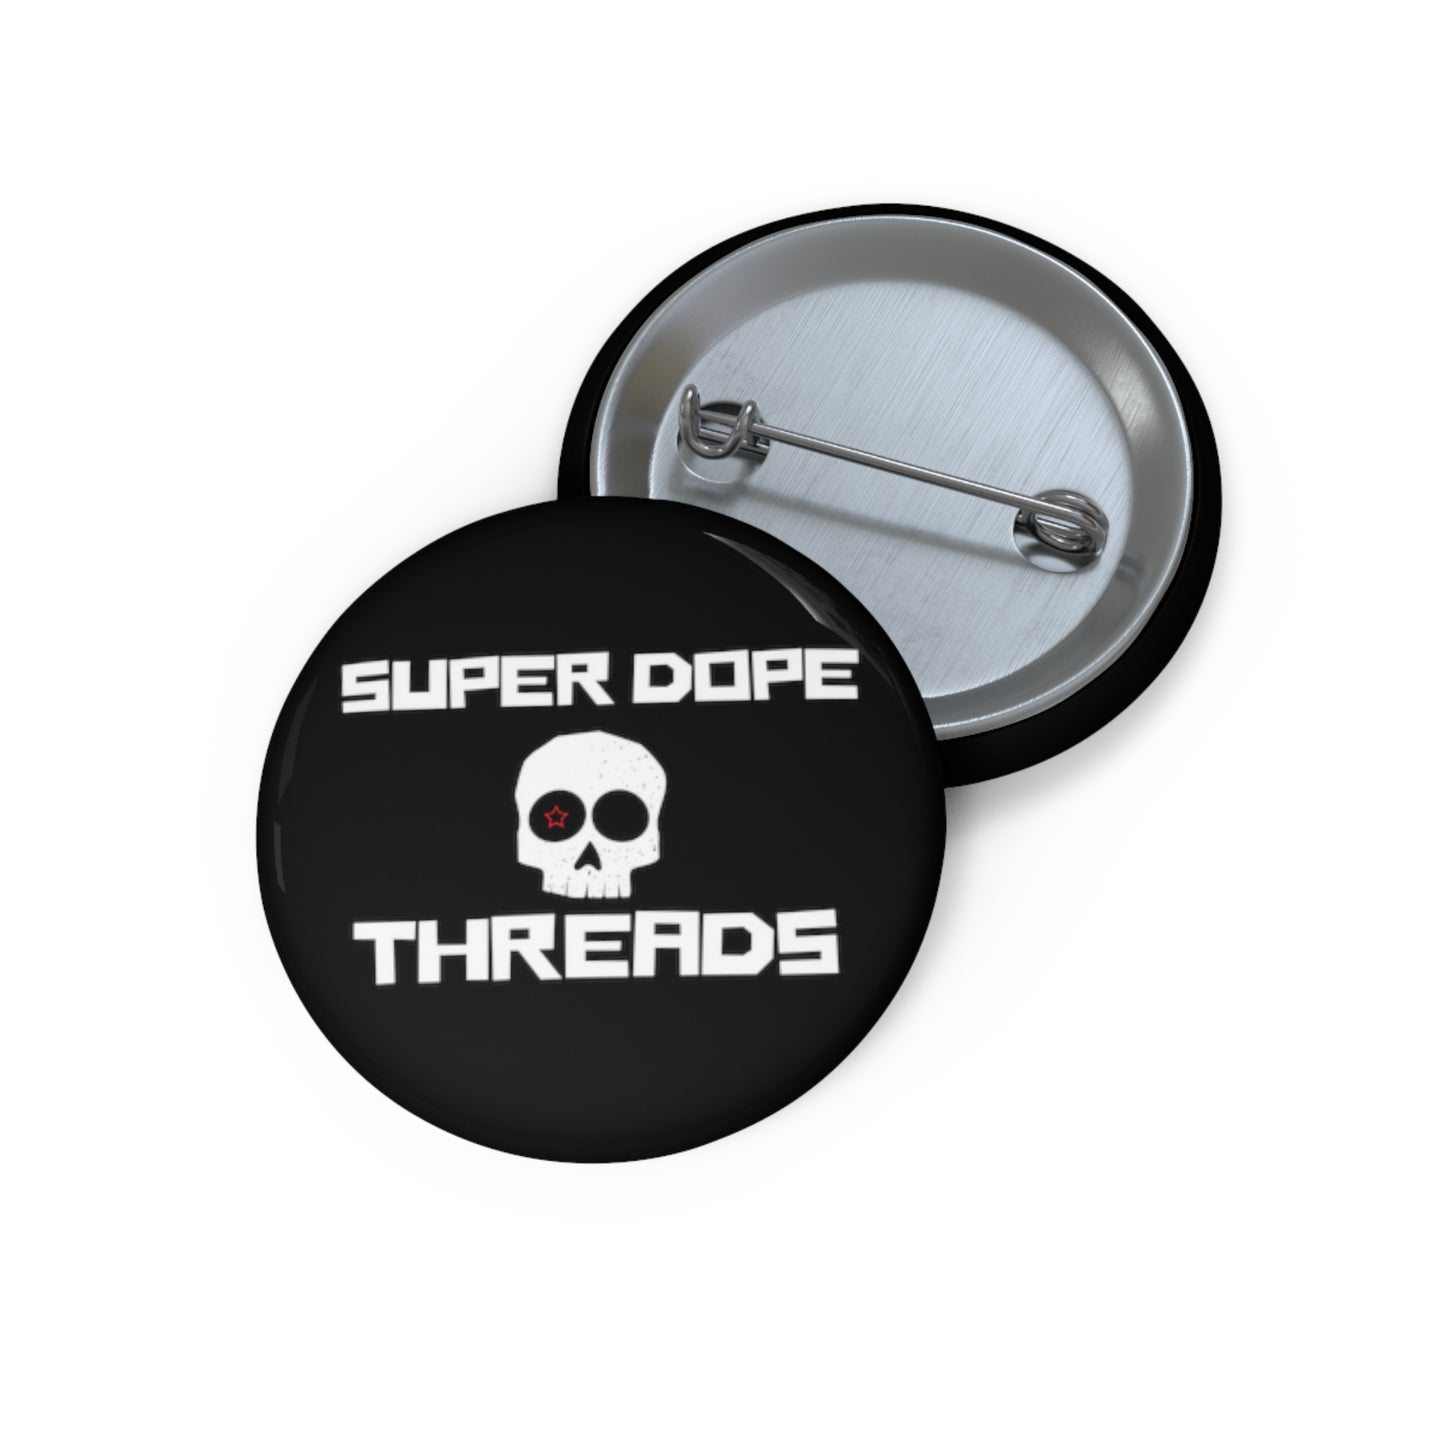 Super Dope Threads Pin Button